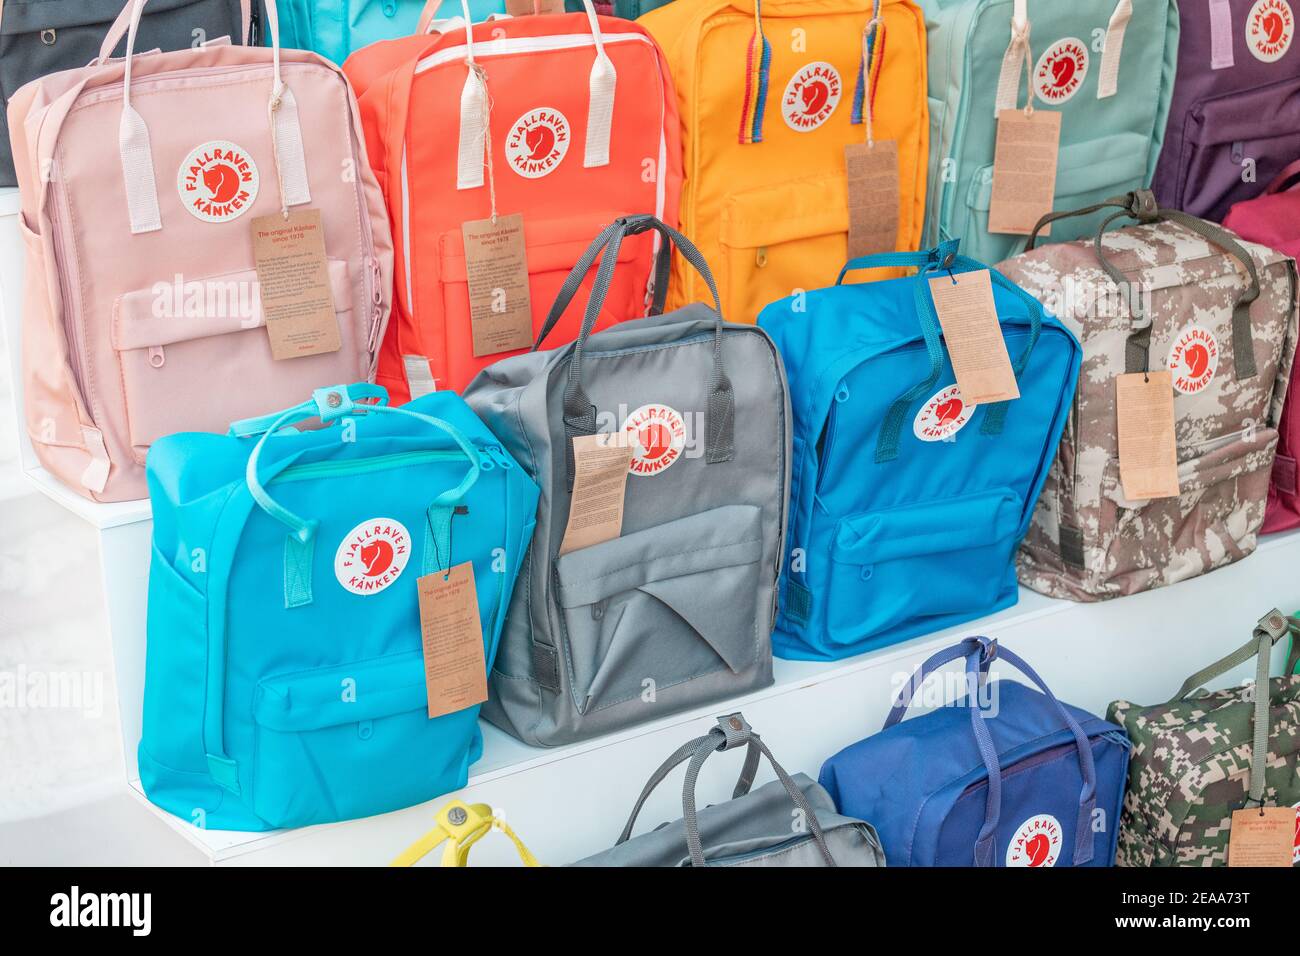 09 September 2020, Dalyan, Turkey: Kanken Fjallraven fashion brand backpacks for sale in local shop Stock Photo